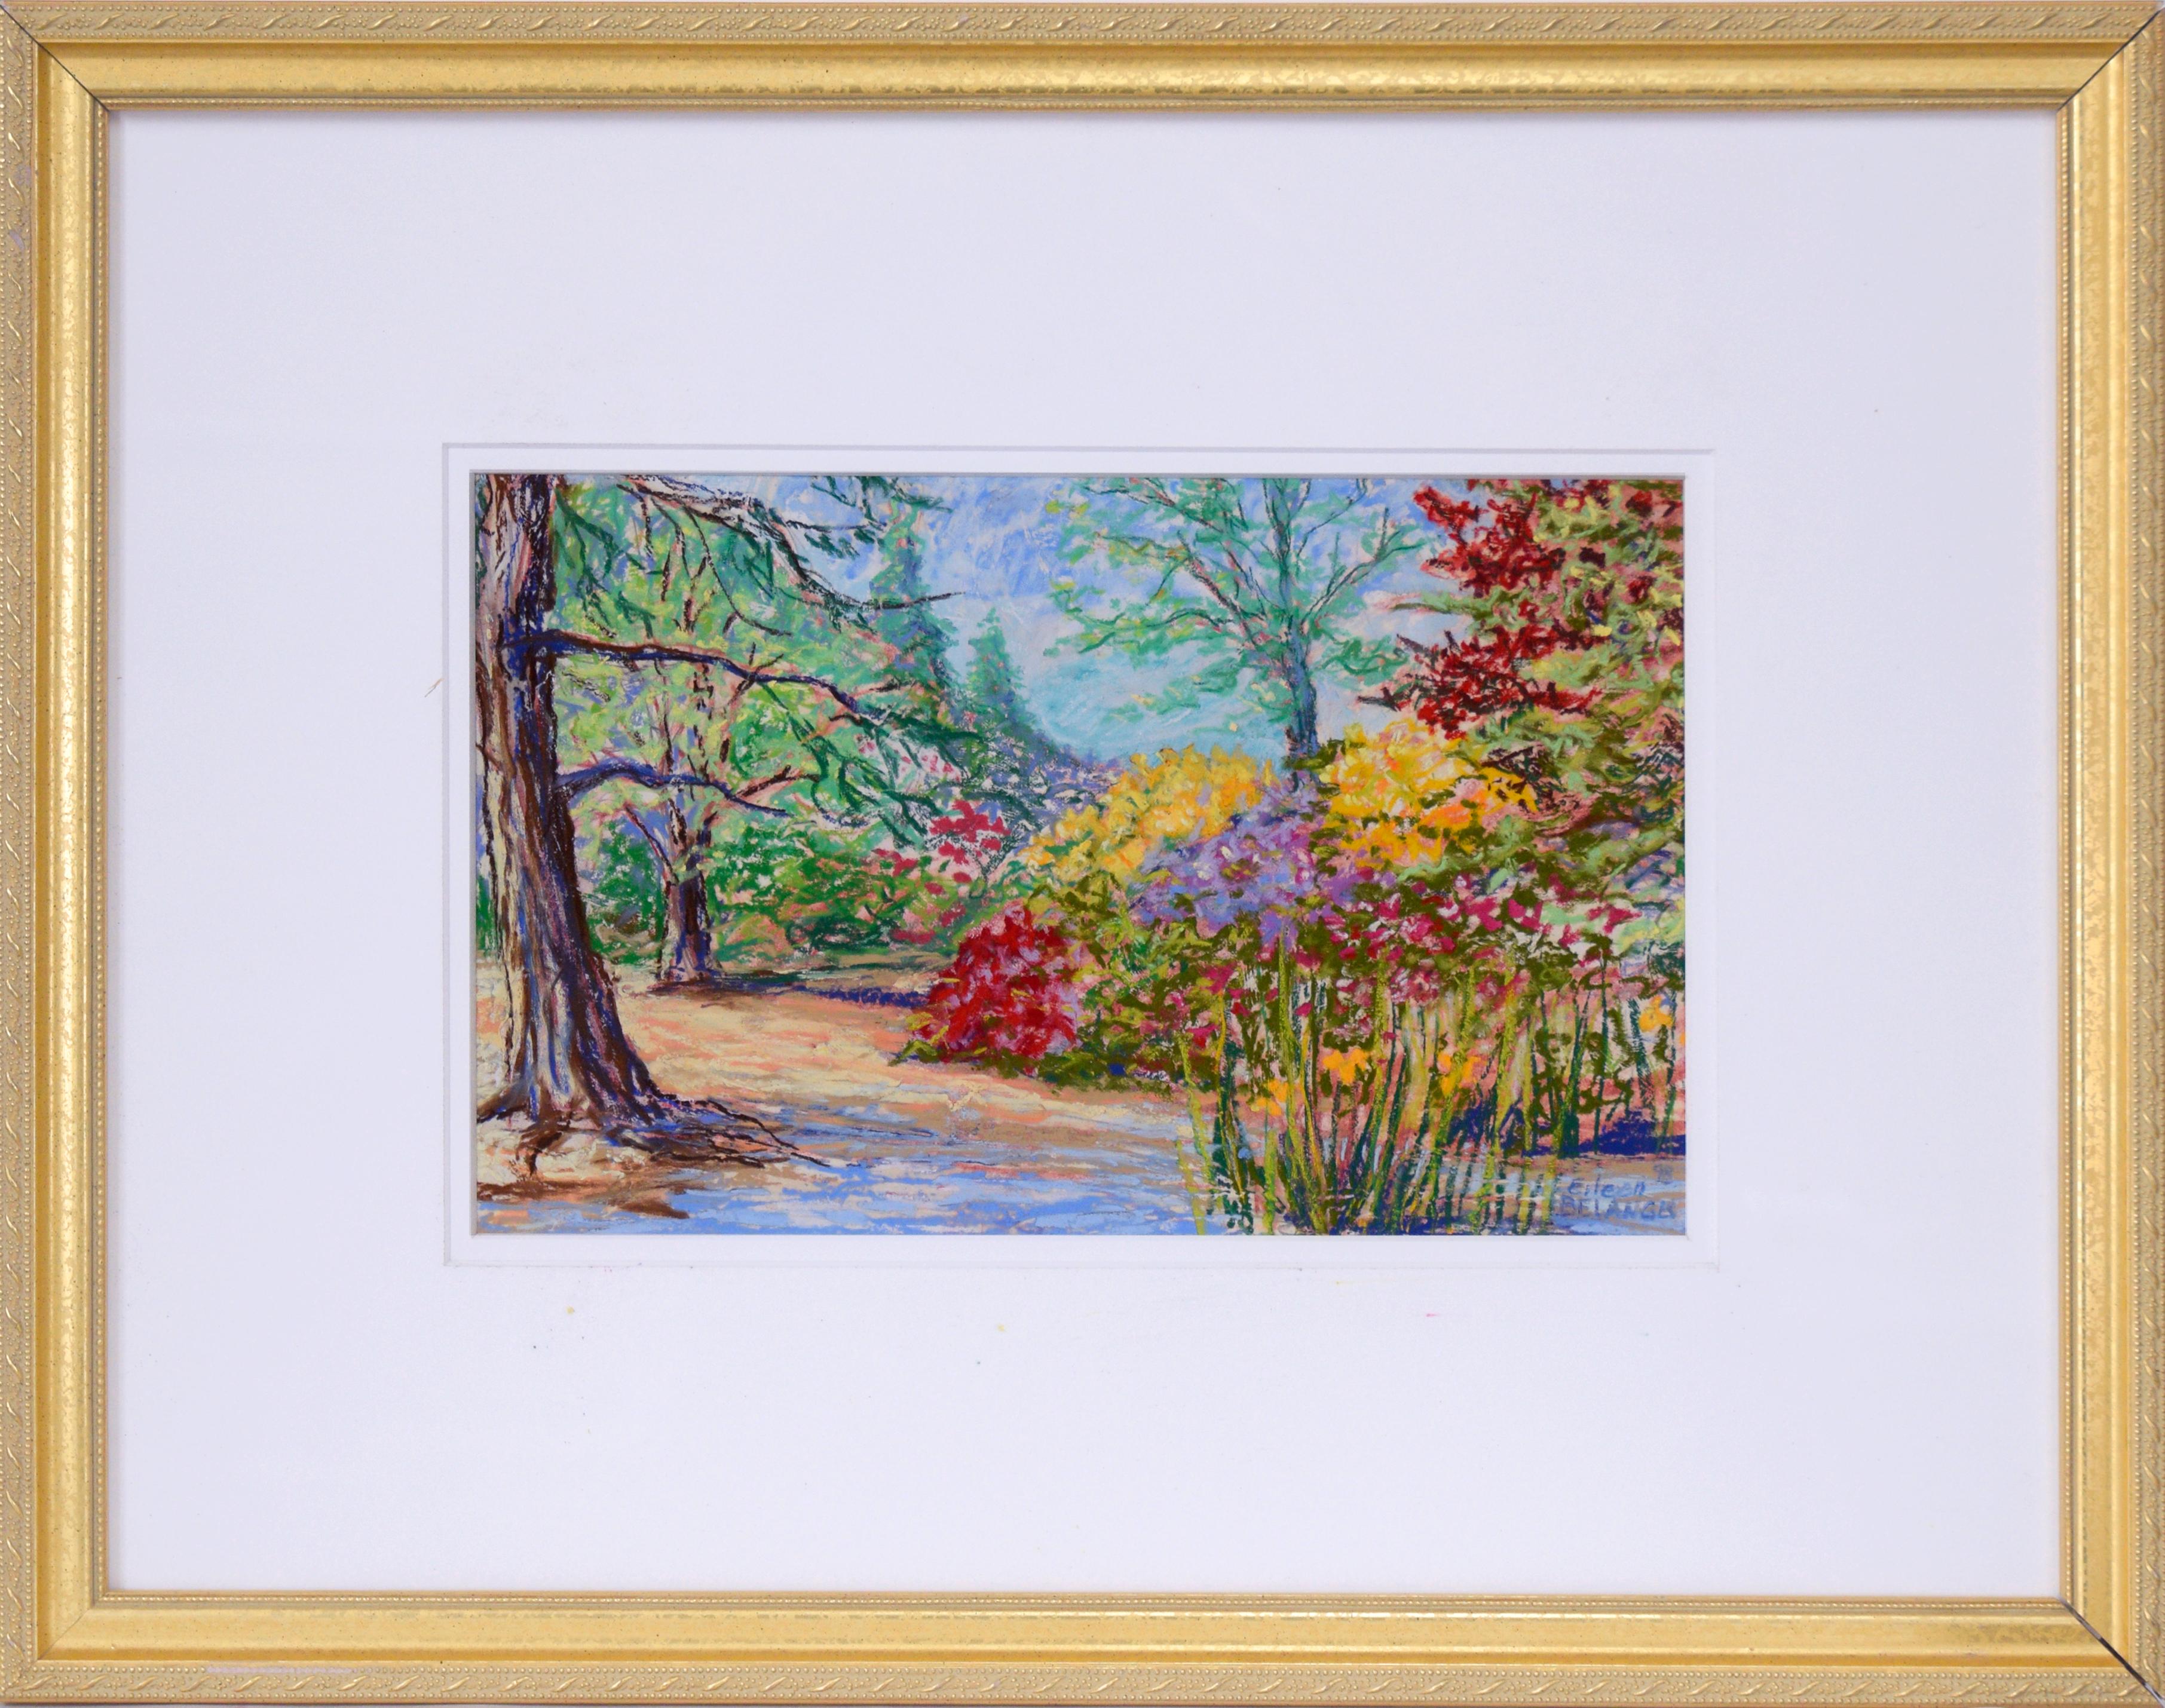 Eileen Belanger Landscape Art - Over the Pastel Garden Wall - New England - Original Oil Pastel on Paper 1998